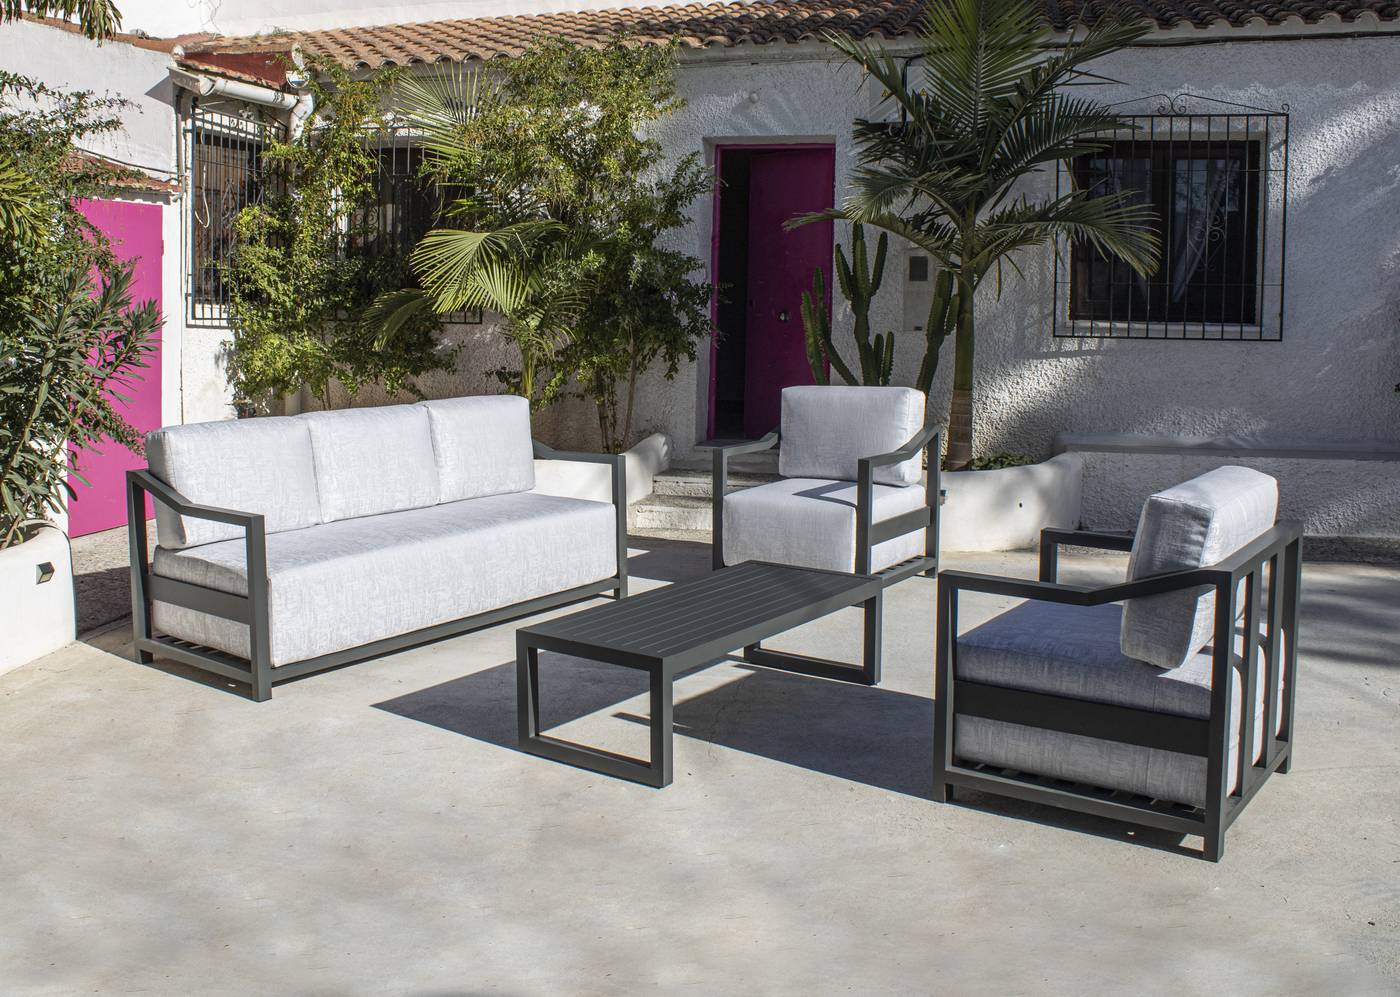 Conjunto aluminio con cojines extra confort: sofá de 3 plazas + 2 sillones + 1 mesa de centro + 2 reposapiés. Colores: blanco, antracita, marrón, champagne o plata.